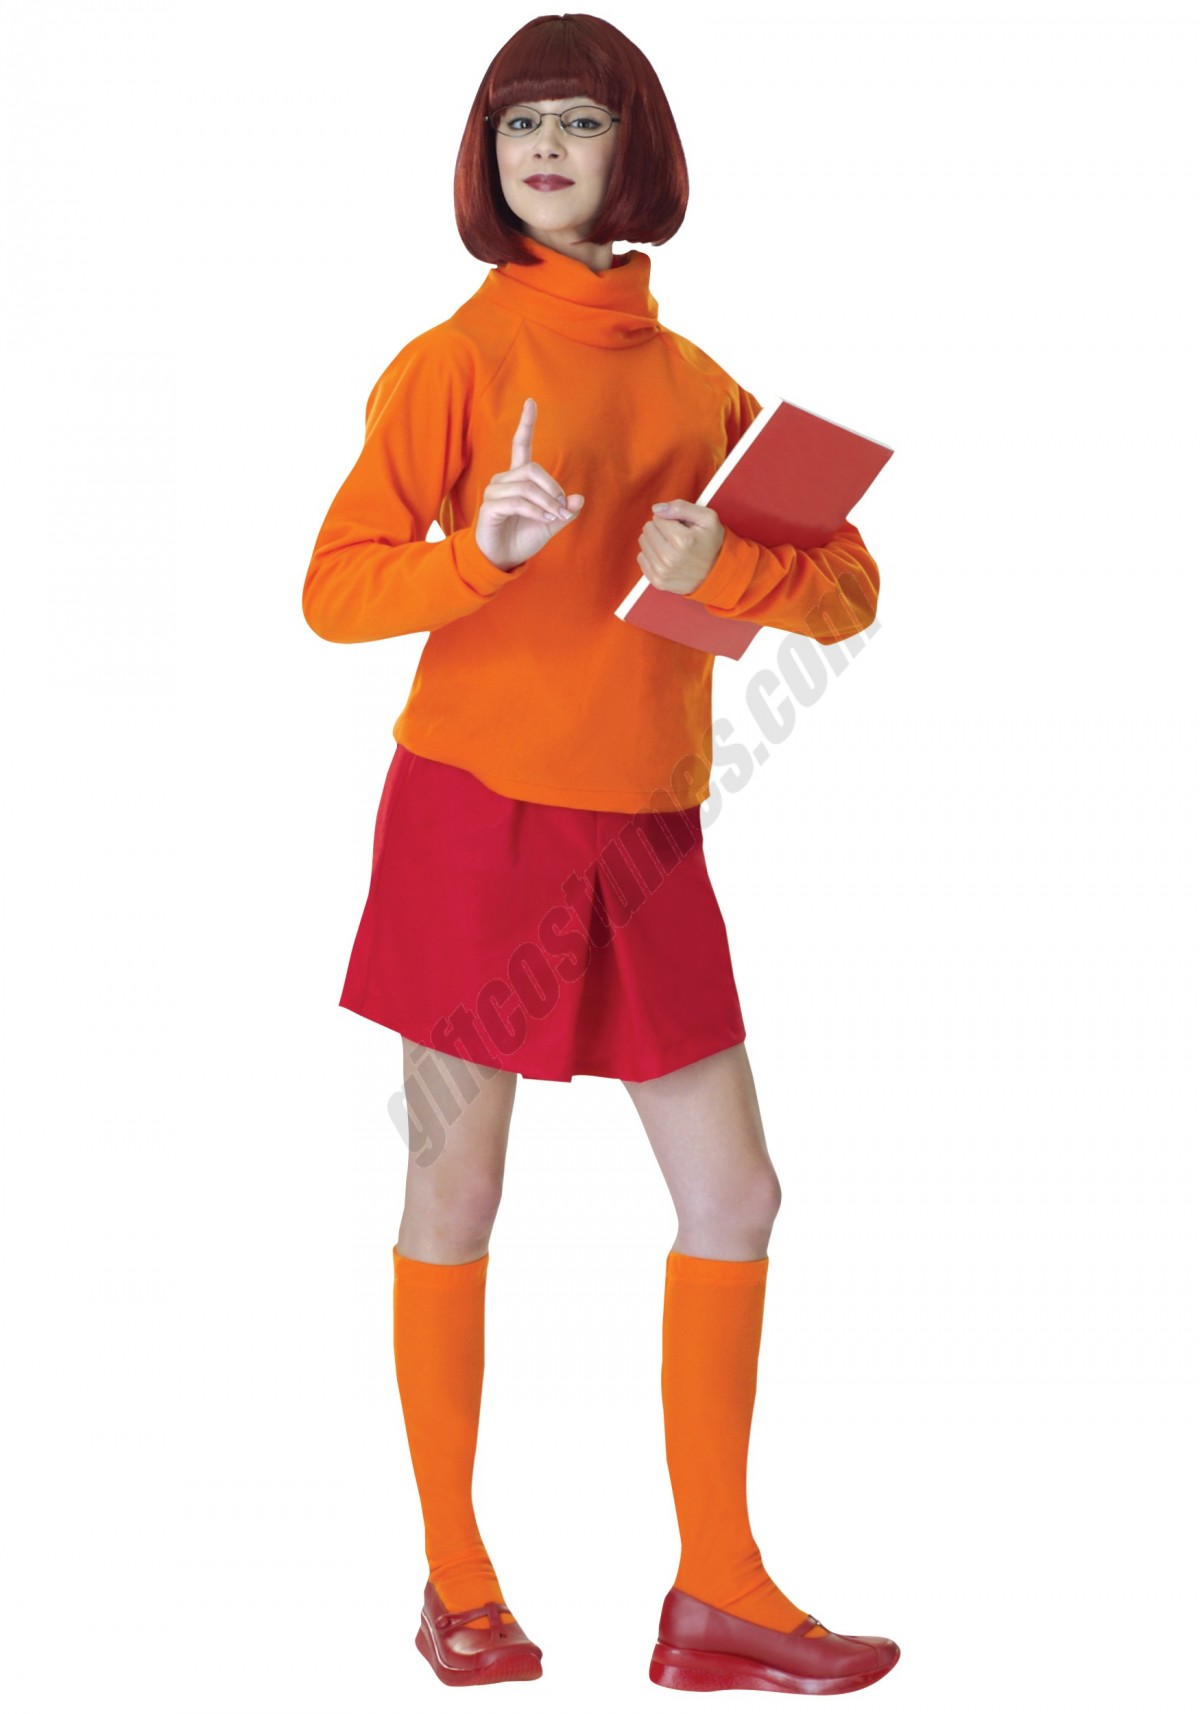 Adult Velma Costume - Women's - -0